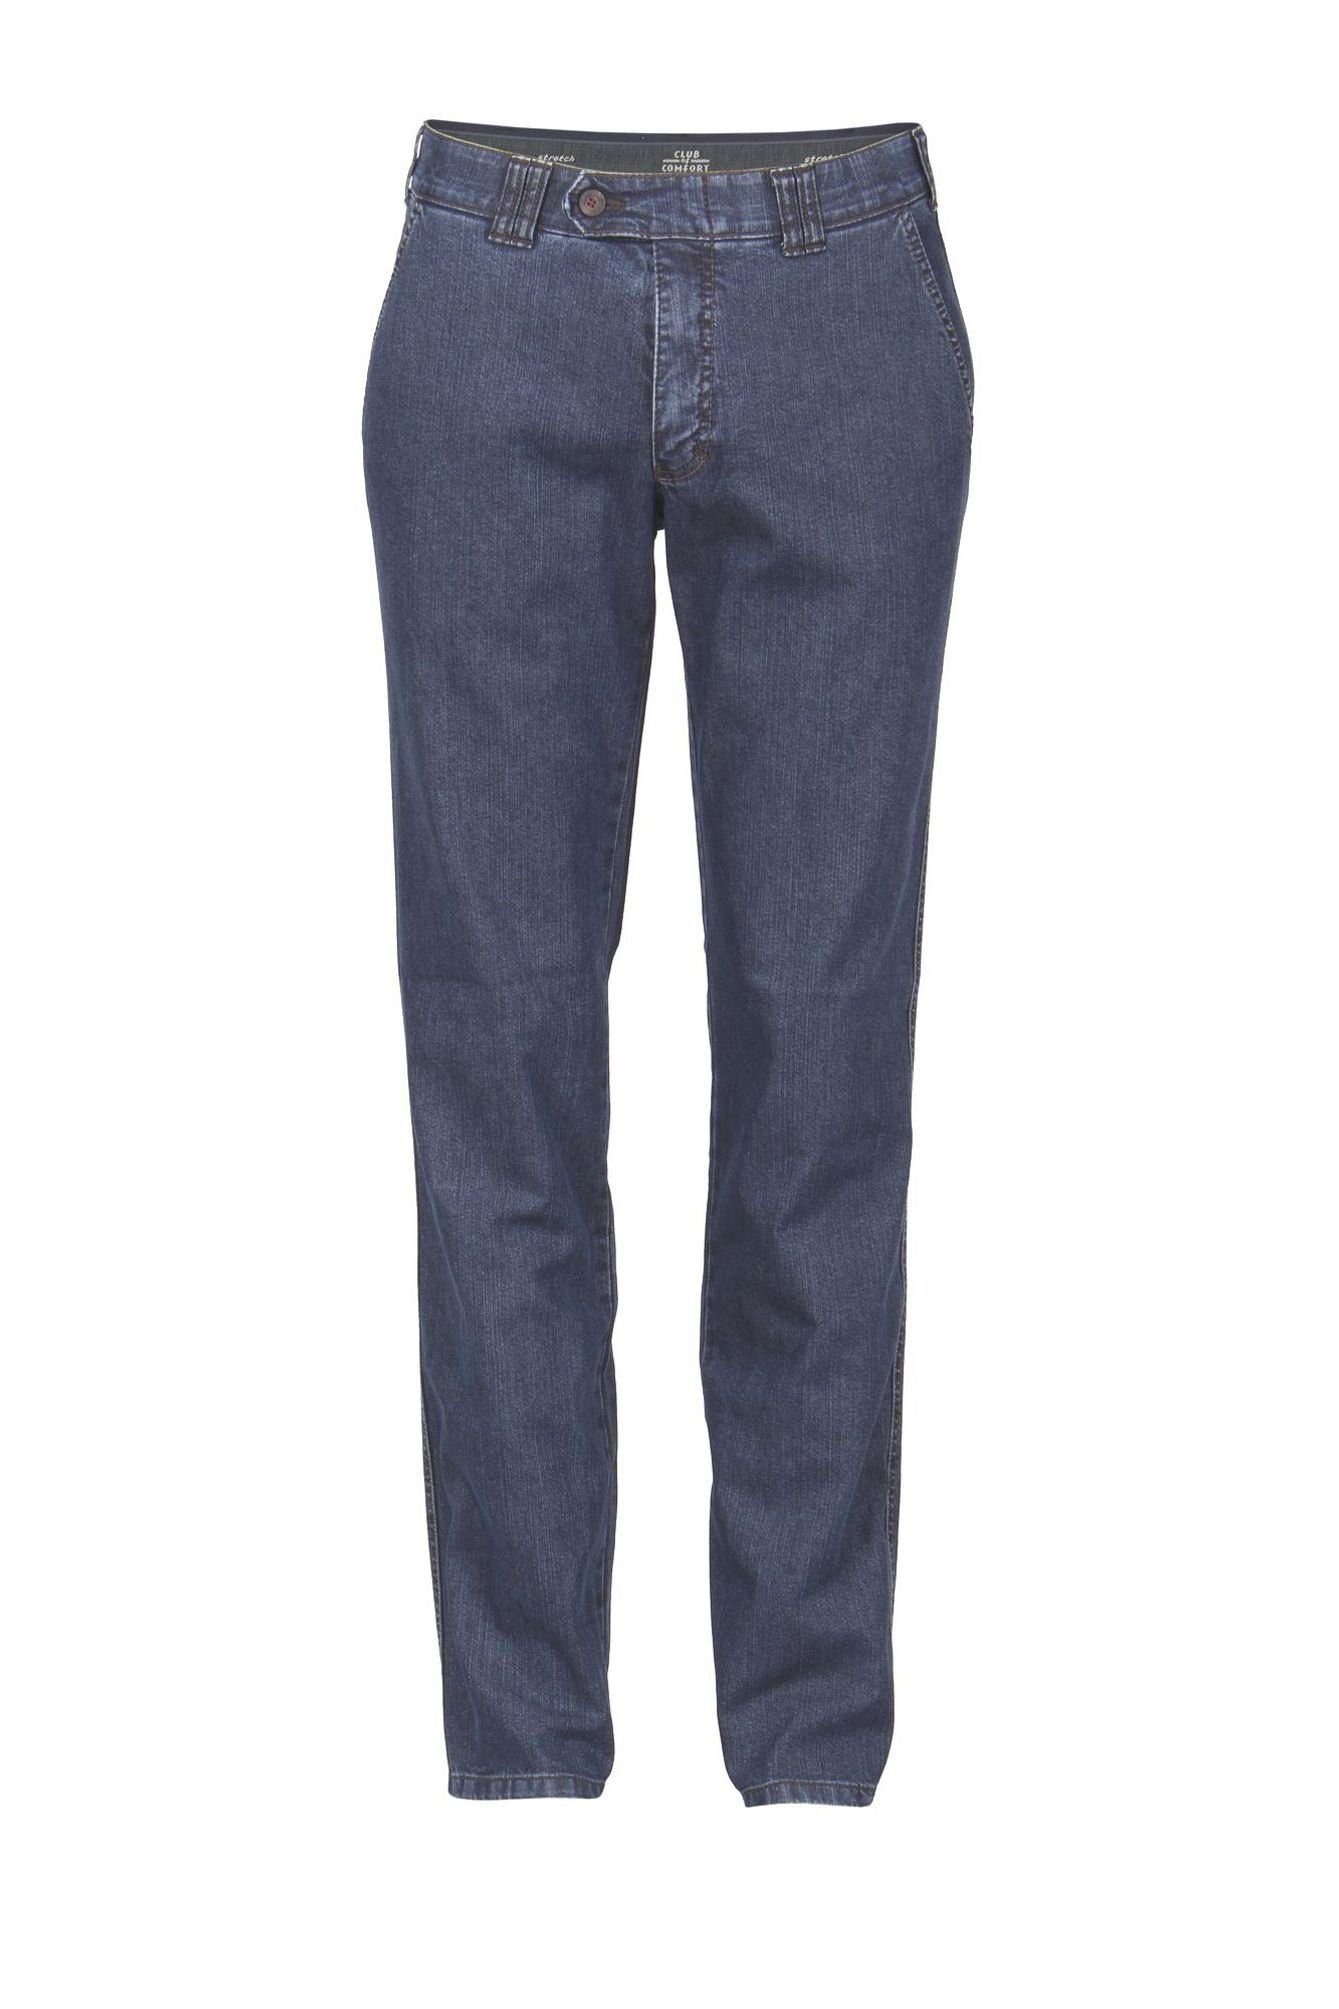 of 5-Pocket-Jeans (44) Blue Club Dark Dallas Comfort